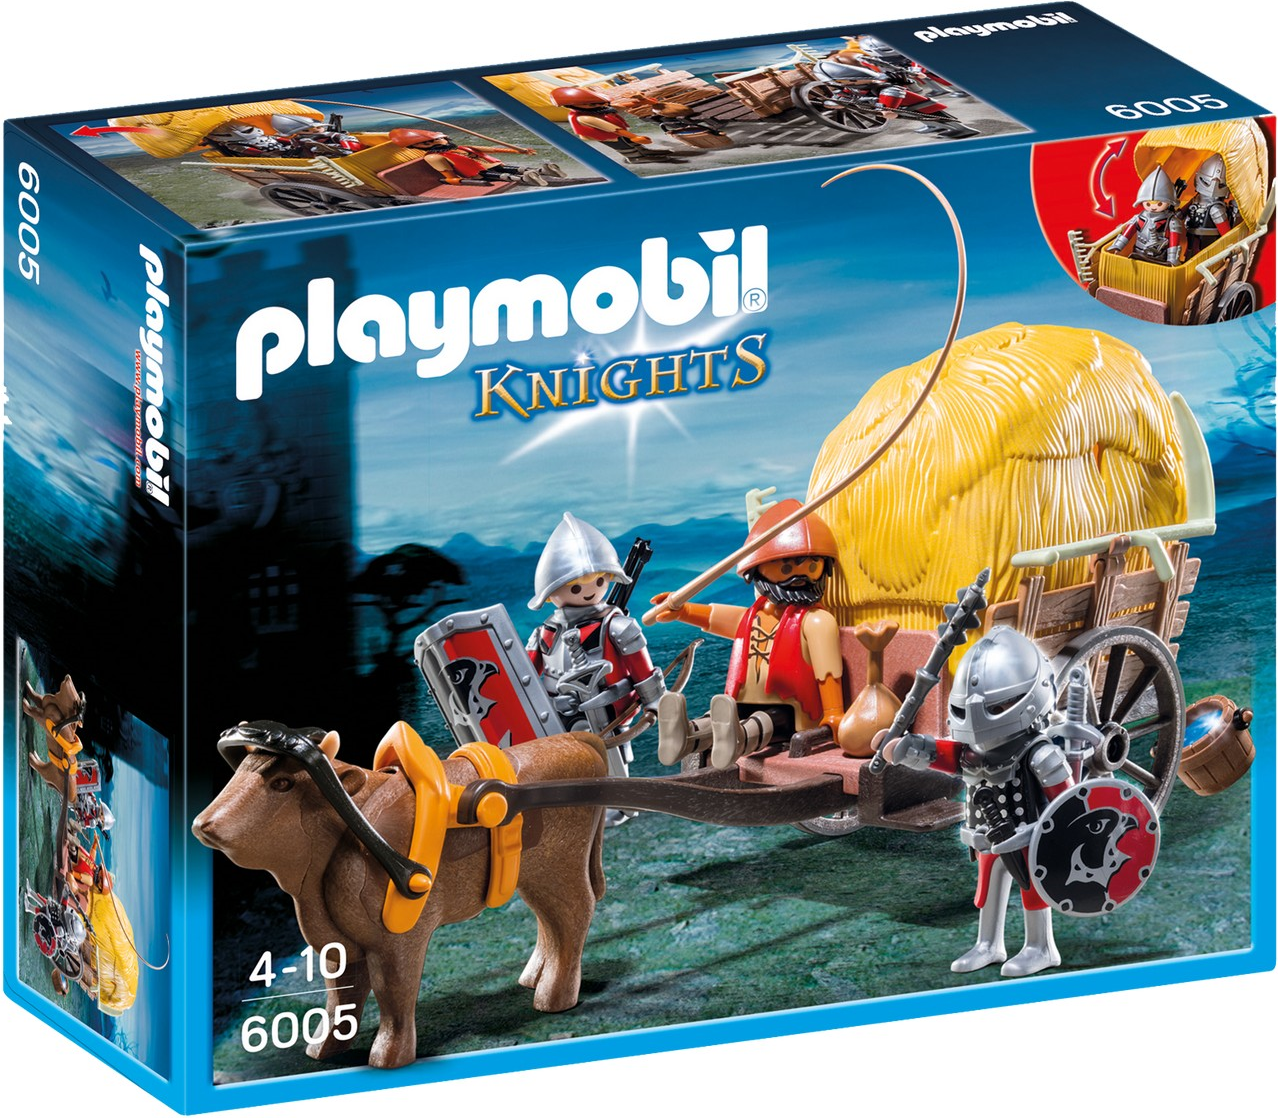 Playmobil Knights 6005 Baufigur (6005)